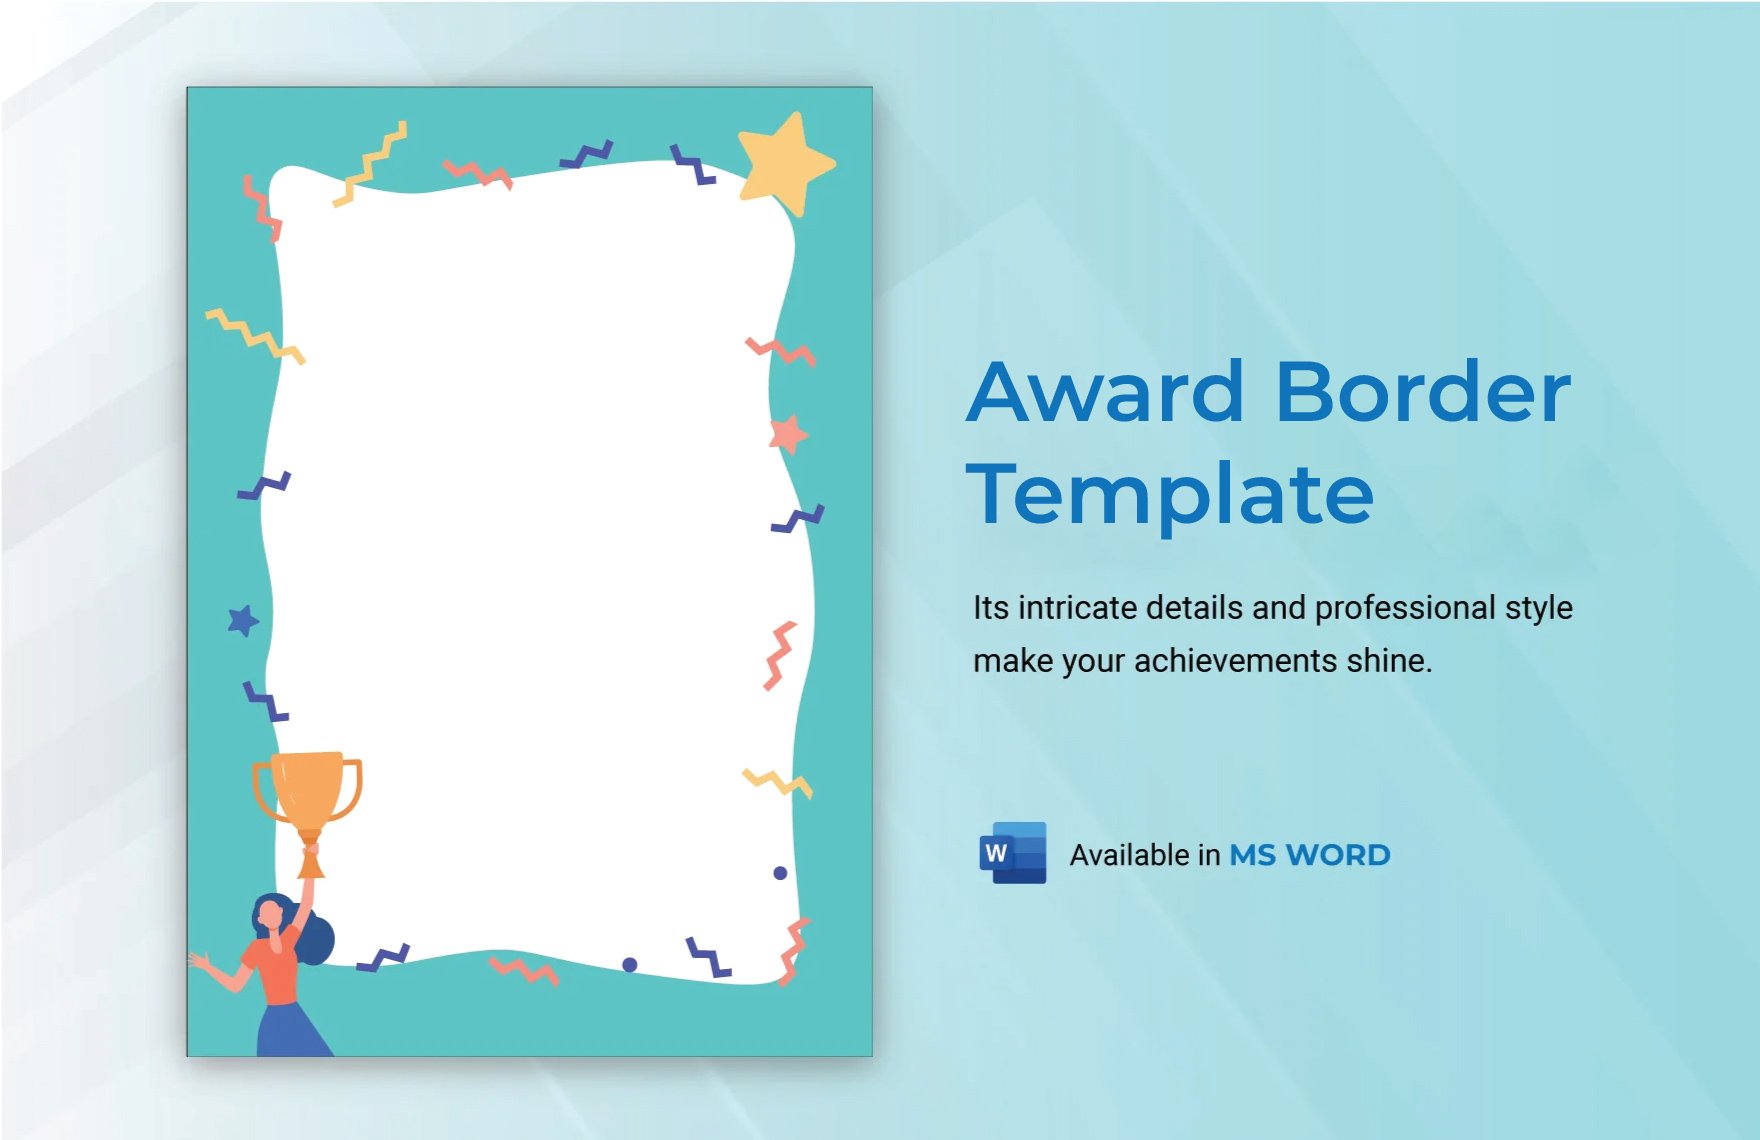 Award Border Template